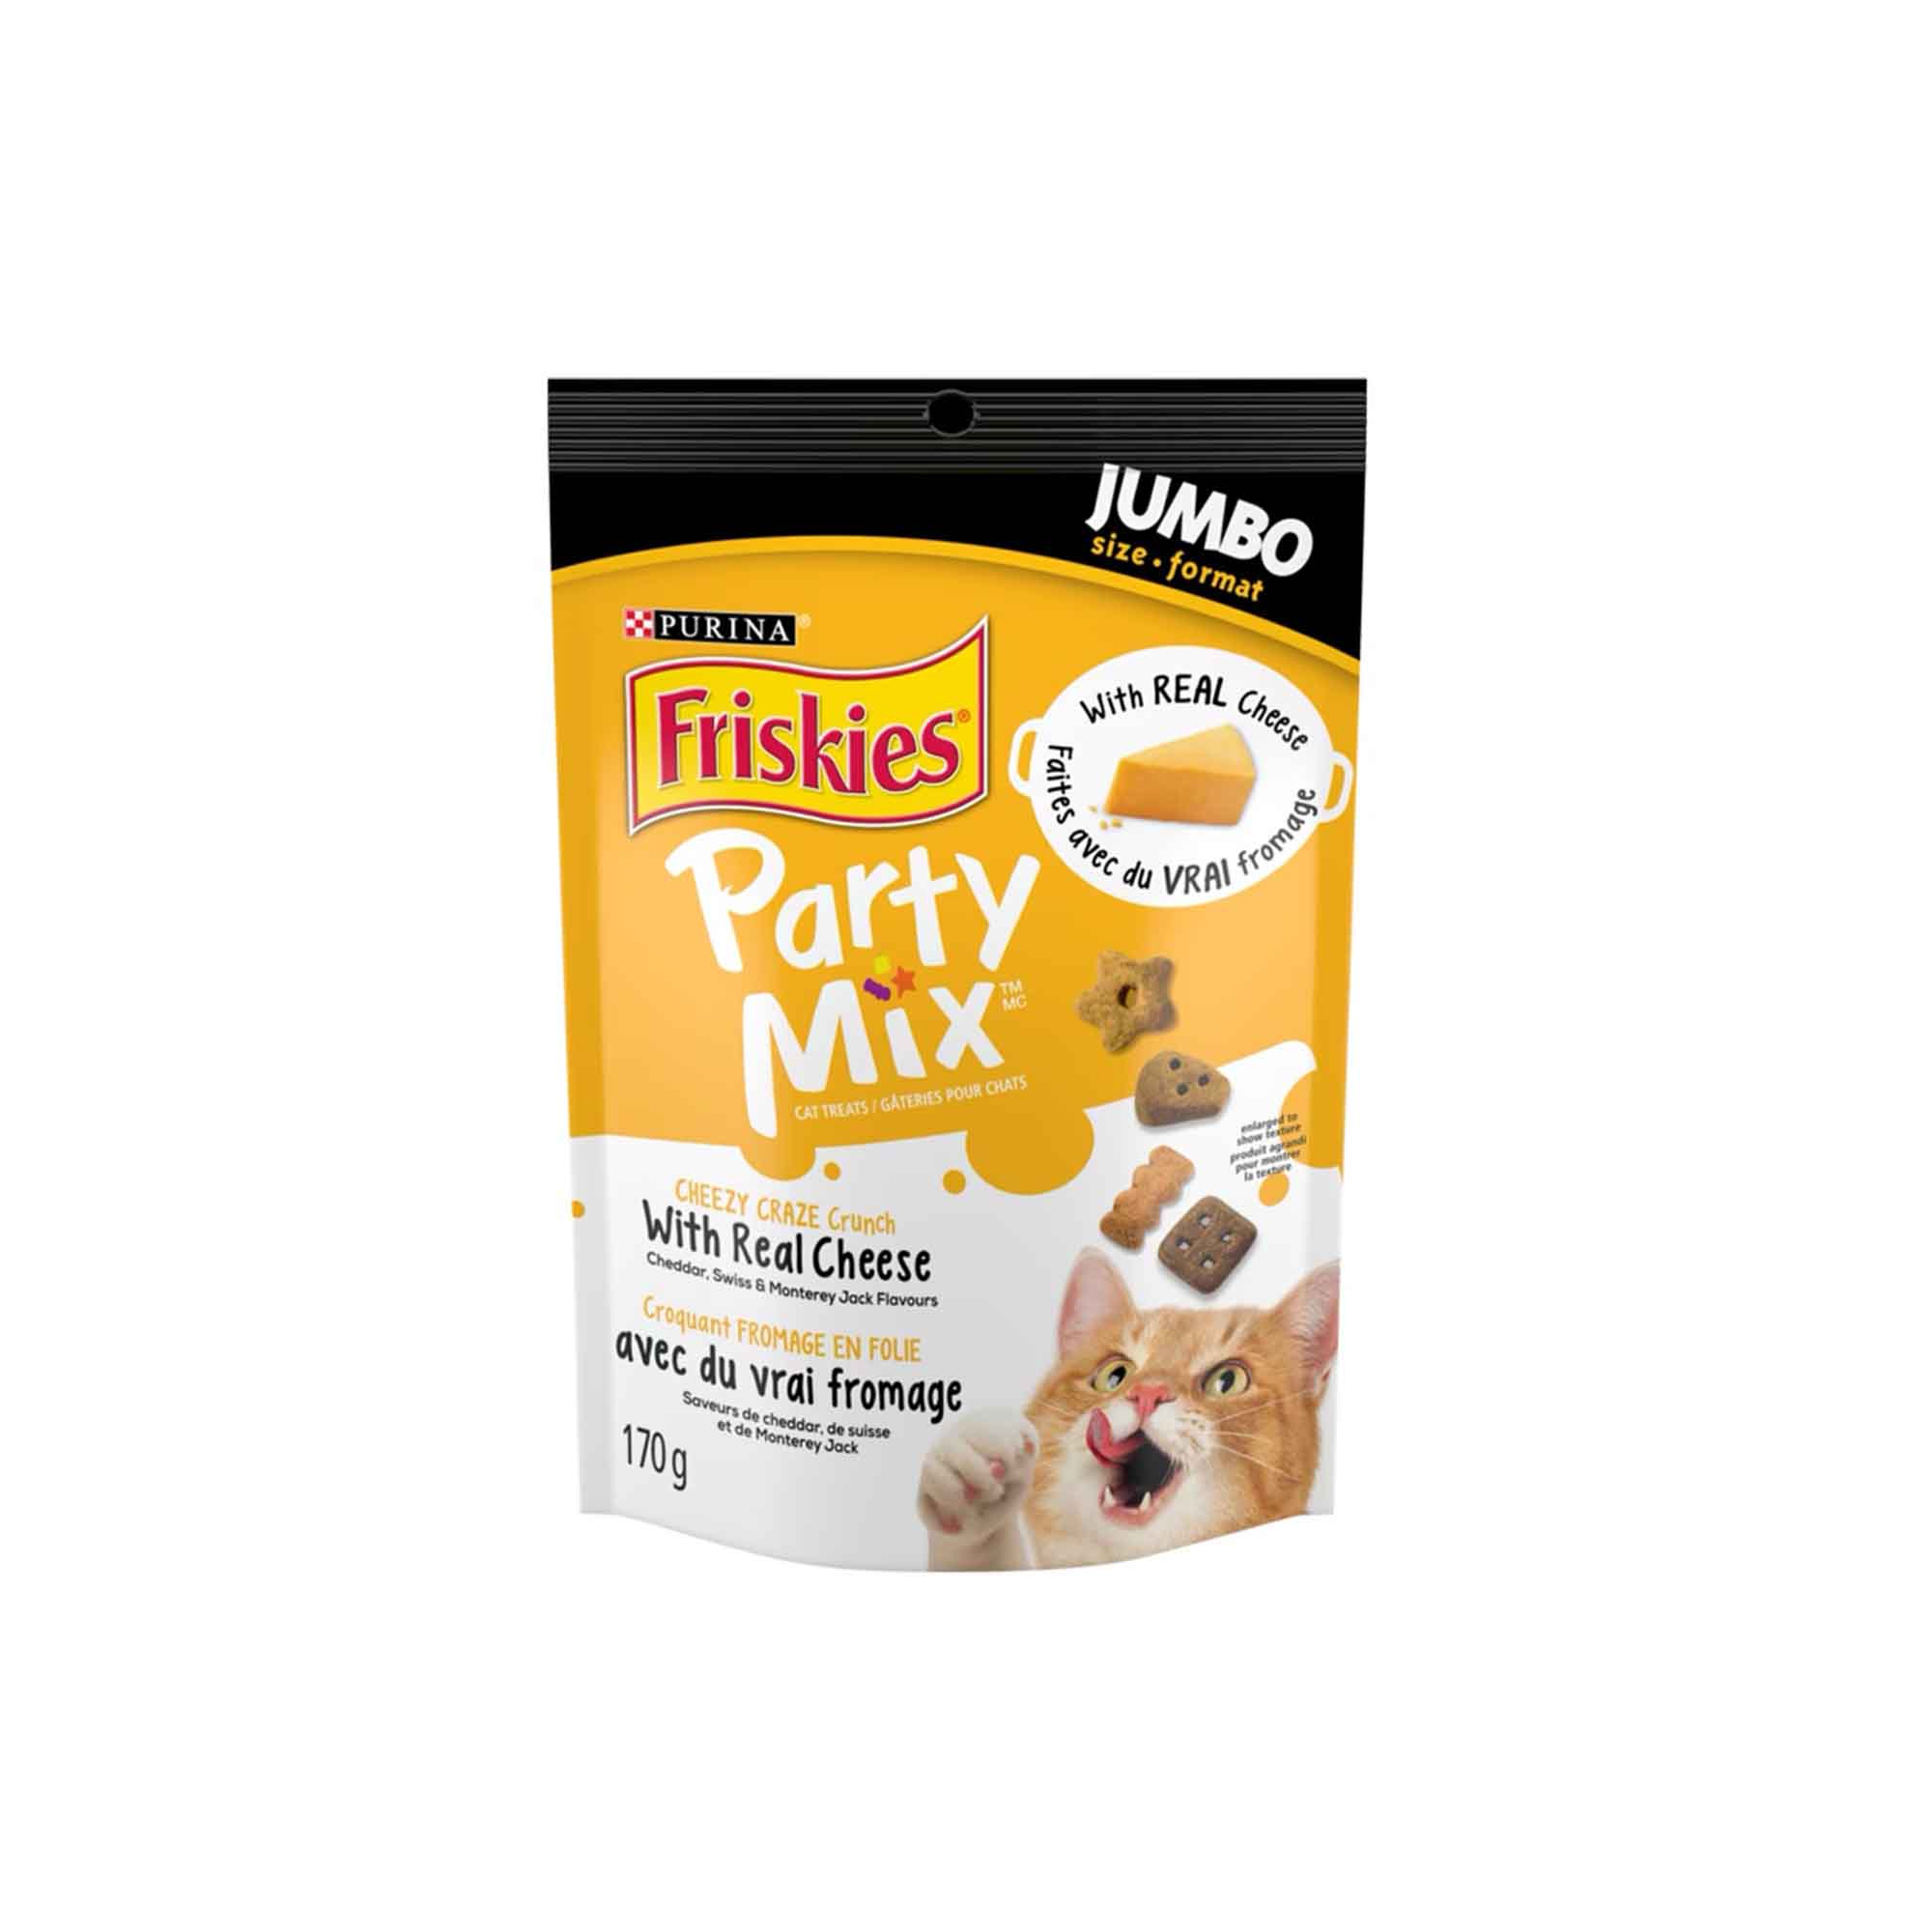 Friskies® Party Mix™ Cheezy Craze Crunch, cat treats - 170g